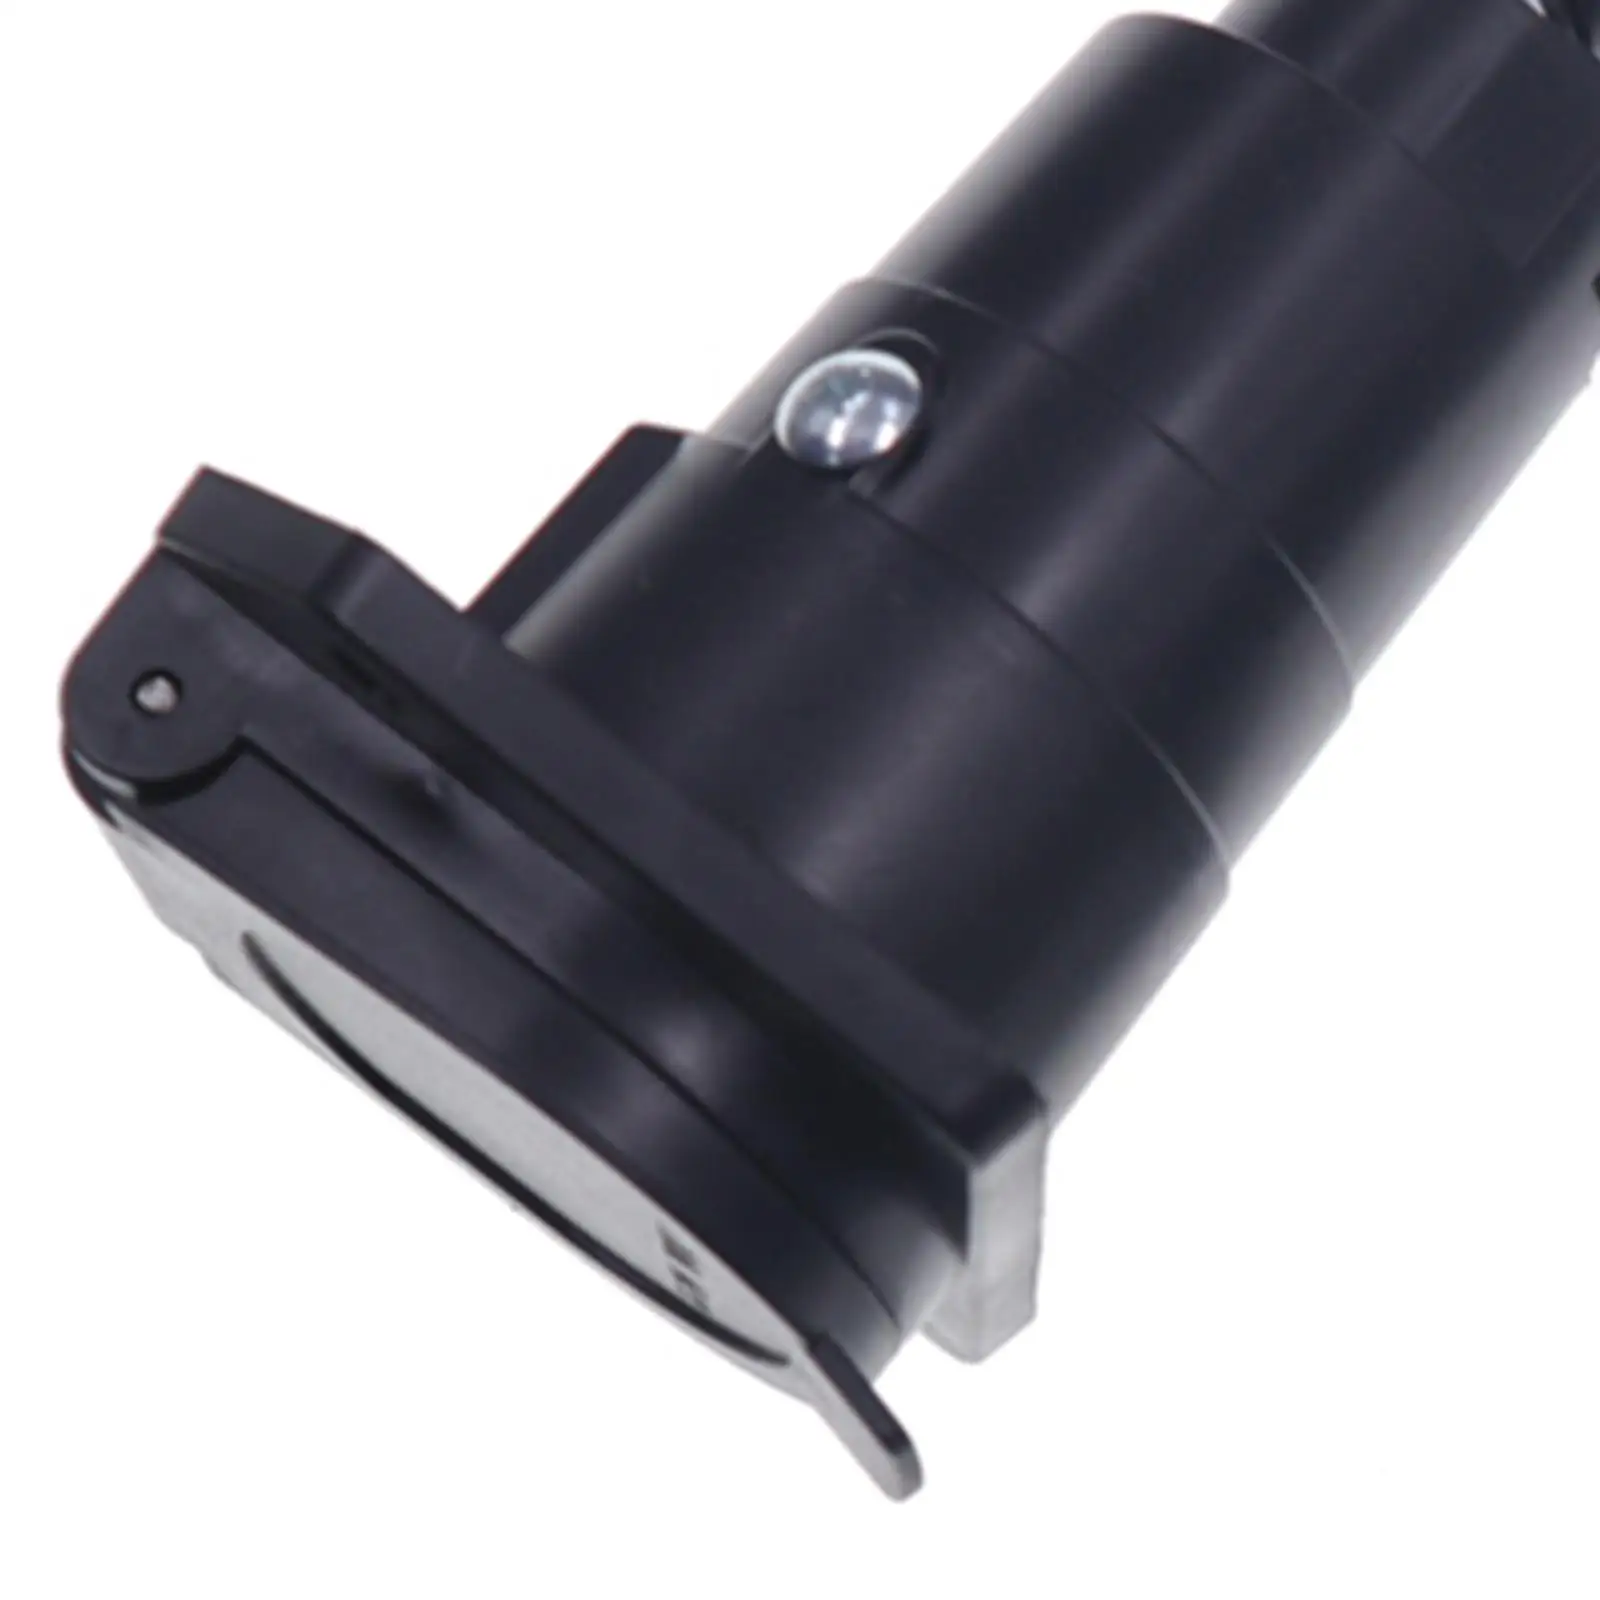 Waterproof Trailer Light Adapter Plug 4 ways Flat to 7 pin round Plug and Play